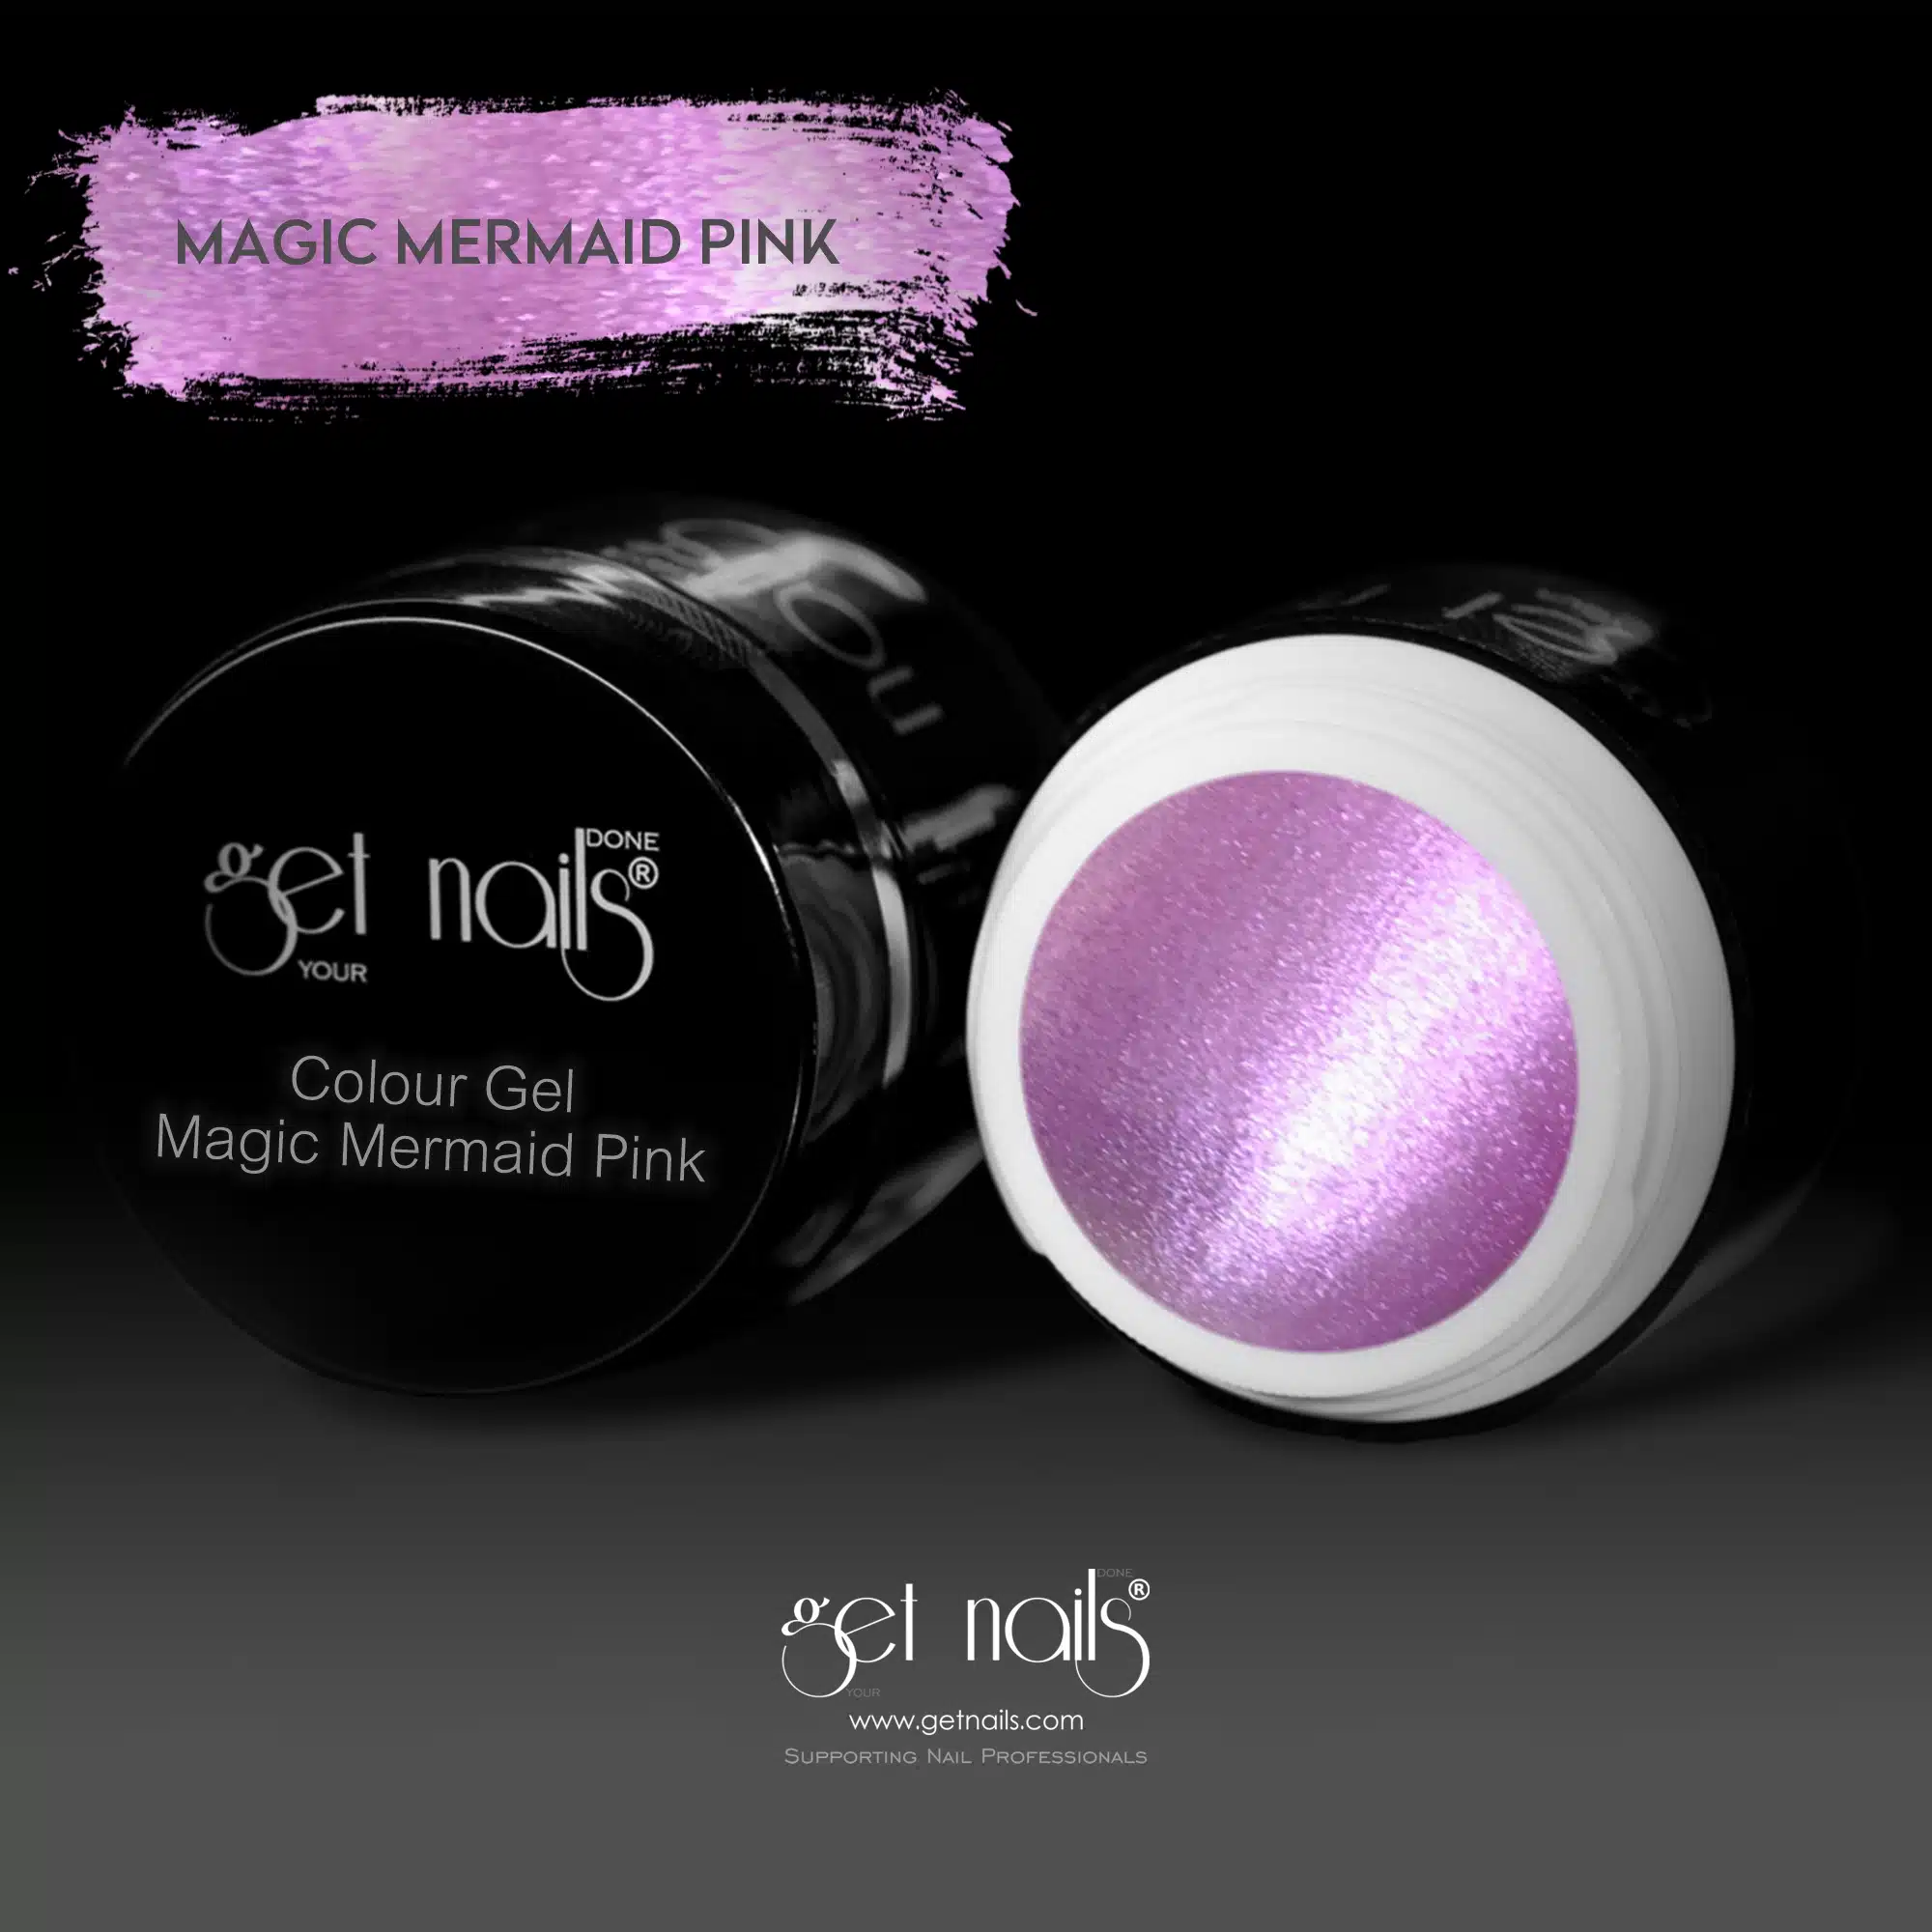 Get Nails Austria - Gel colorato Magic Mermaid Pink 5g